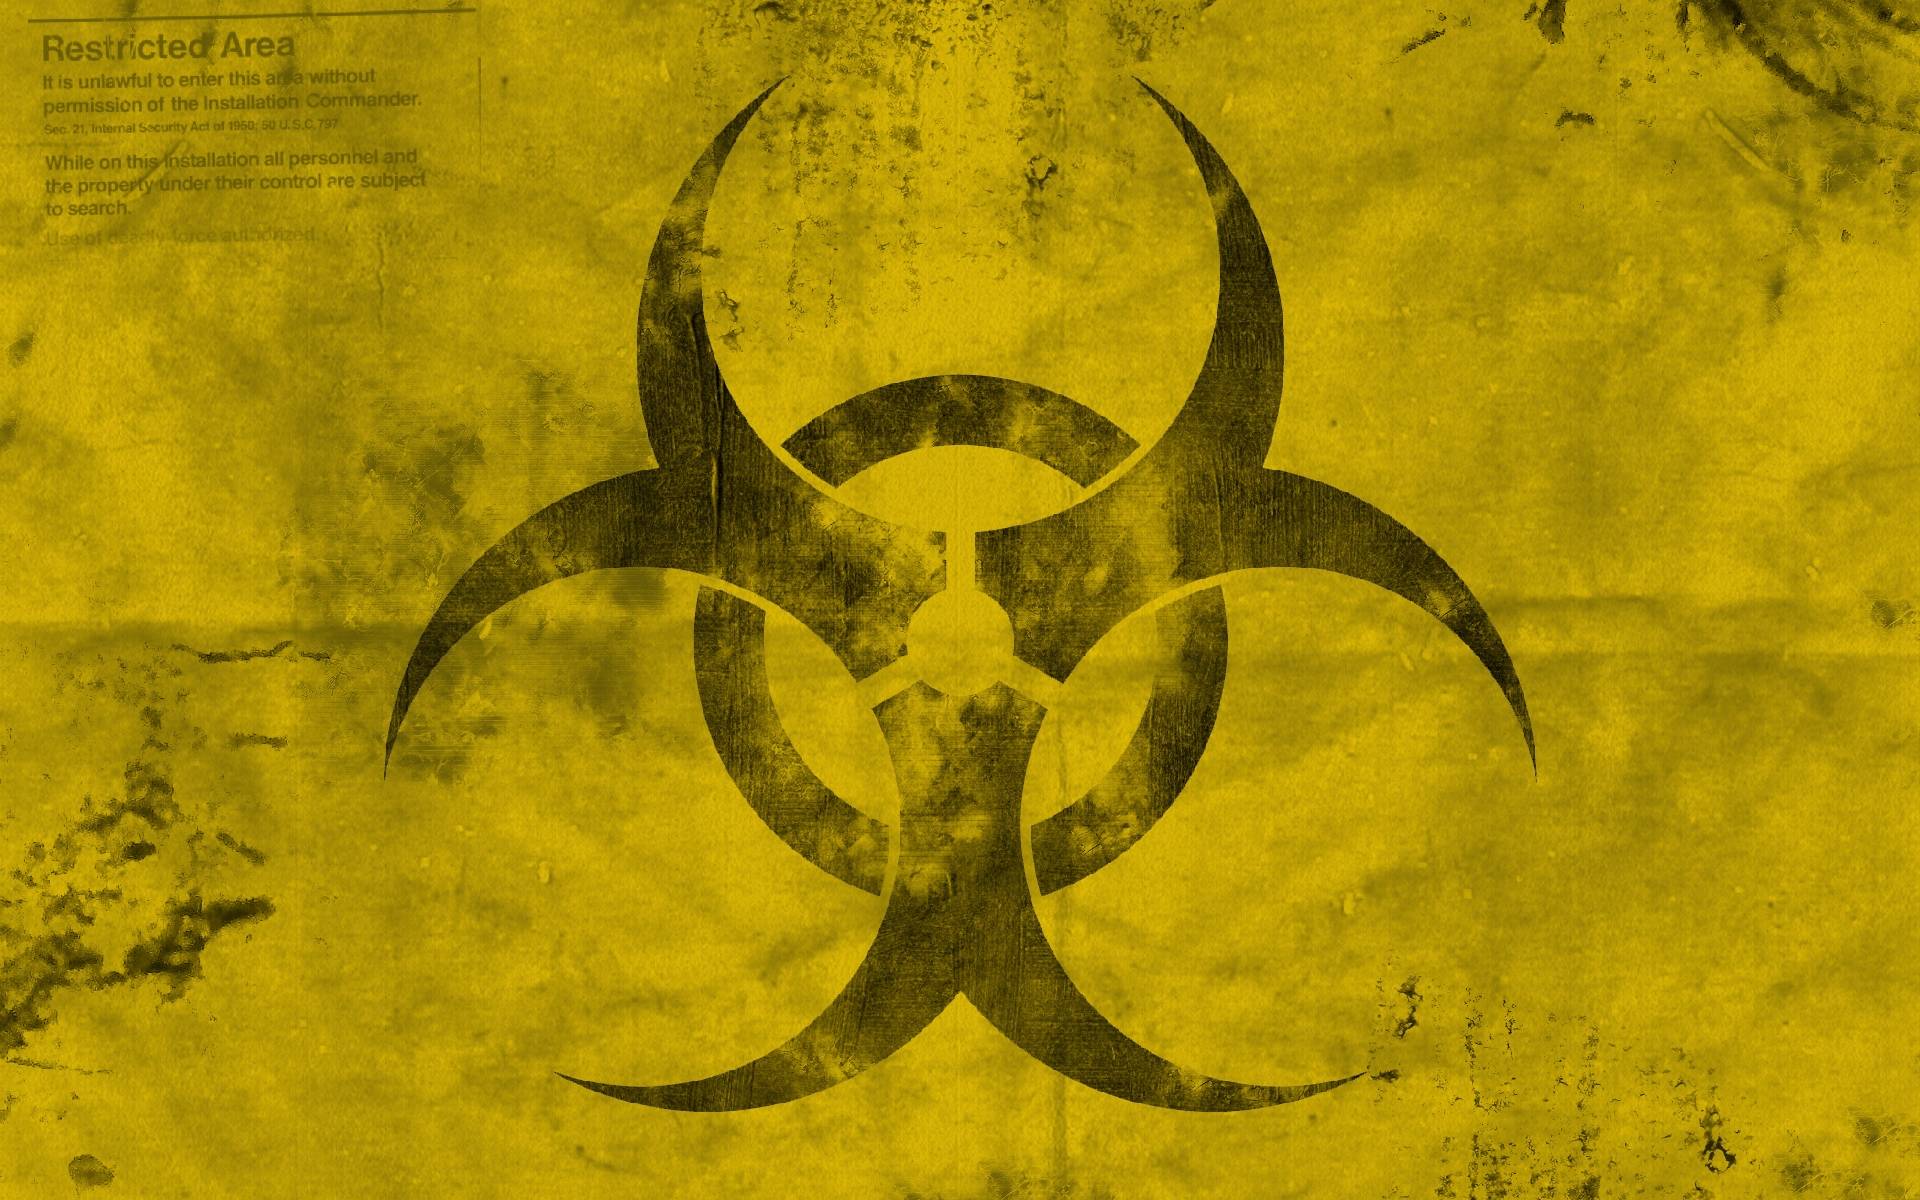 Official Biohazard Symbol